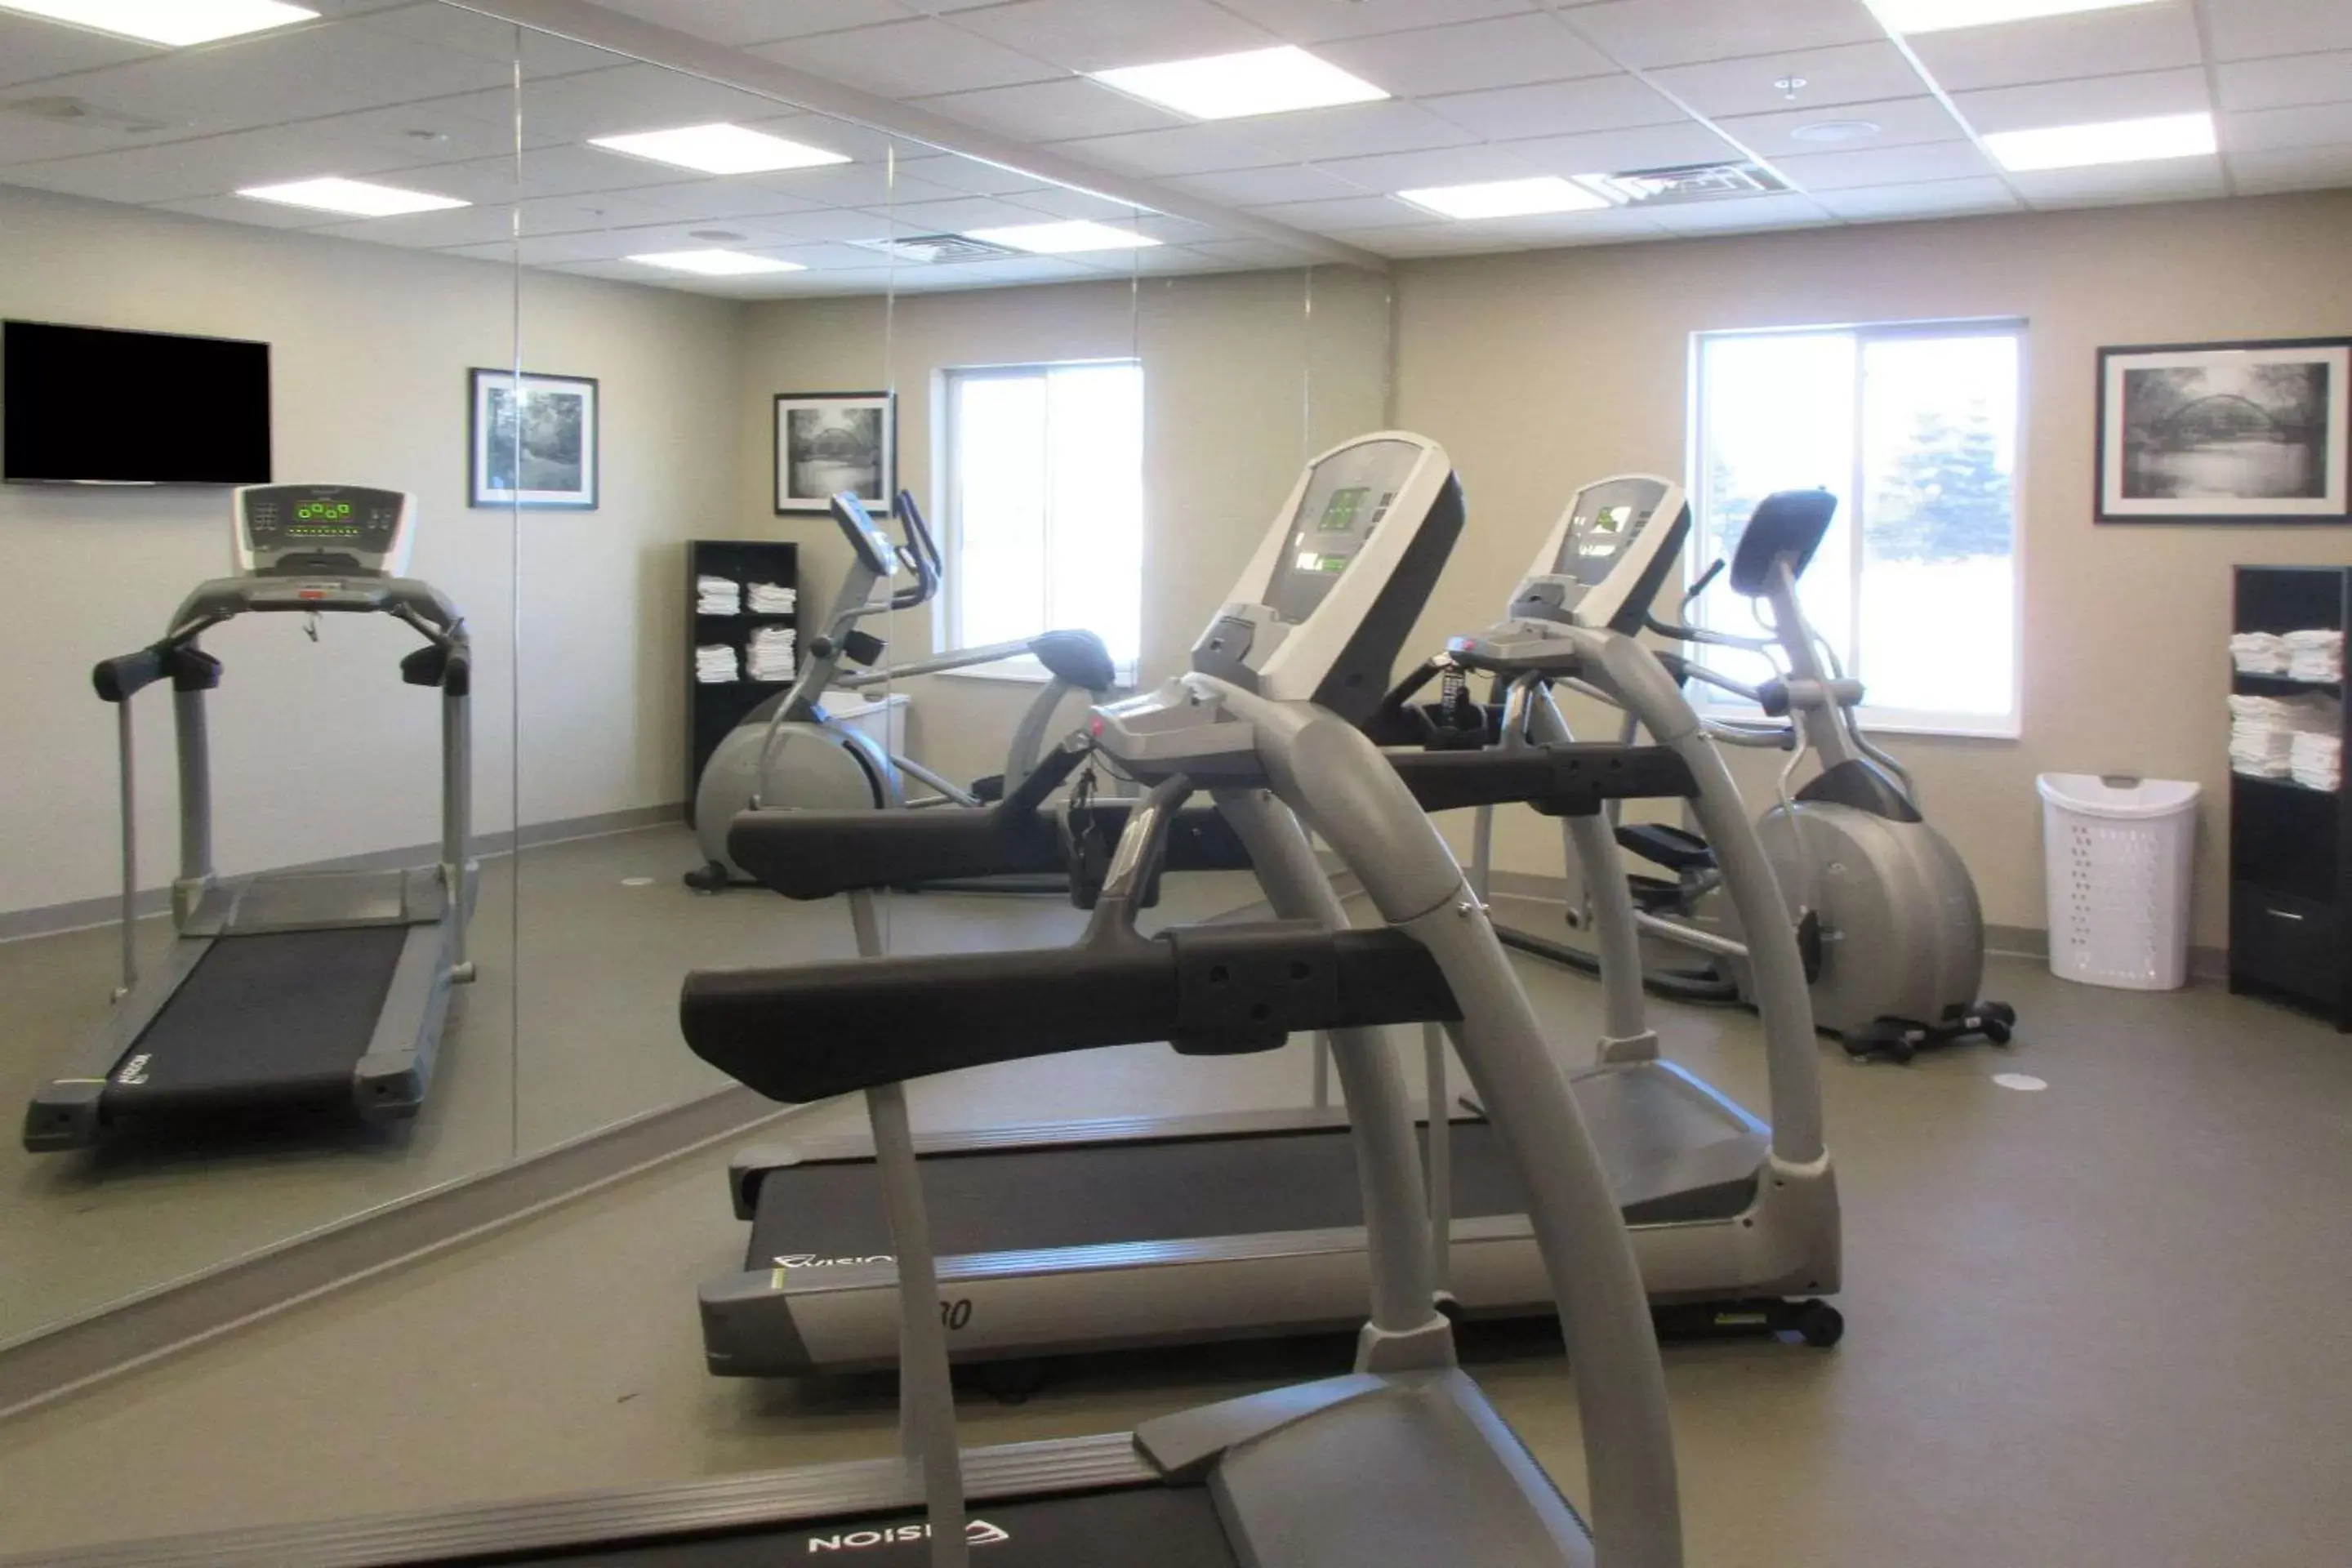 Fitness centre/facilities, Fitness Center/Facilities in Sleep Inn & Suites Oregon - Madison